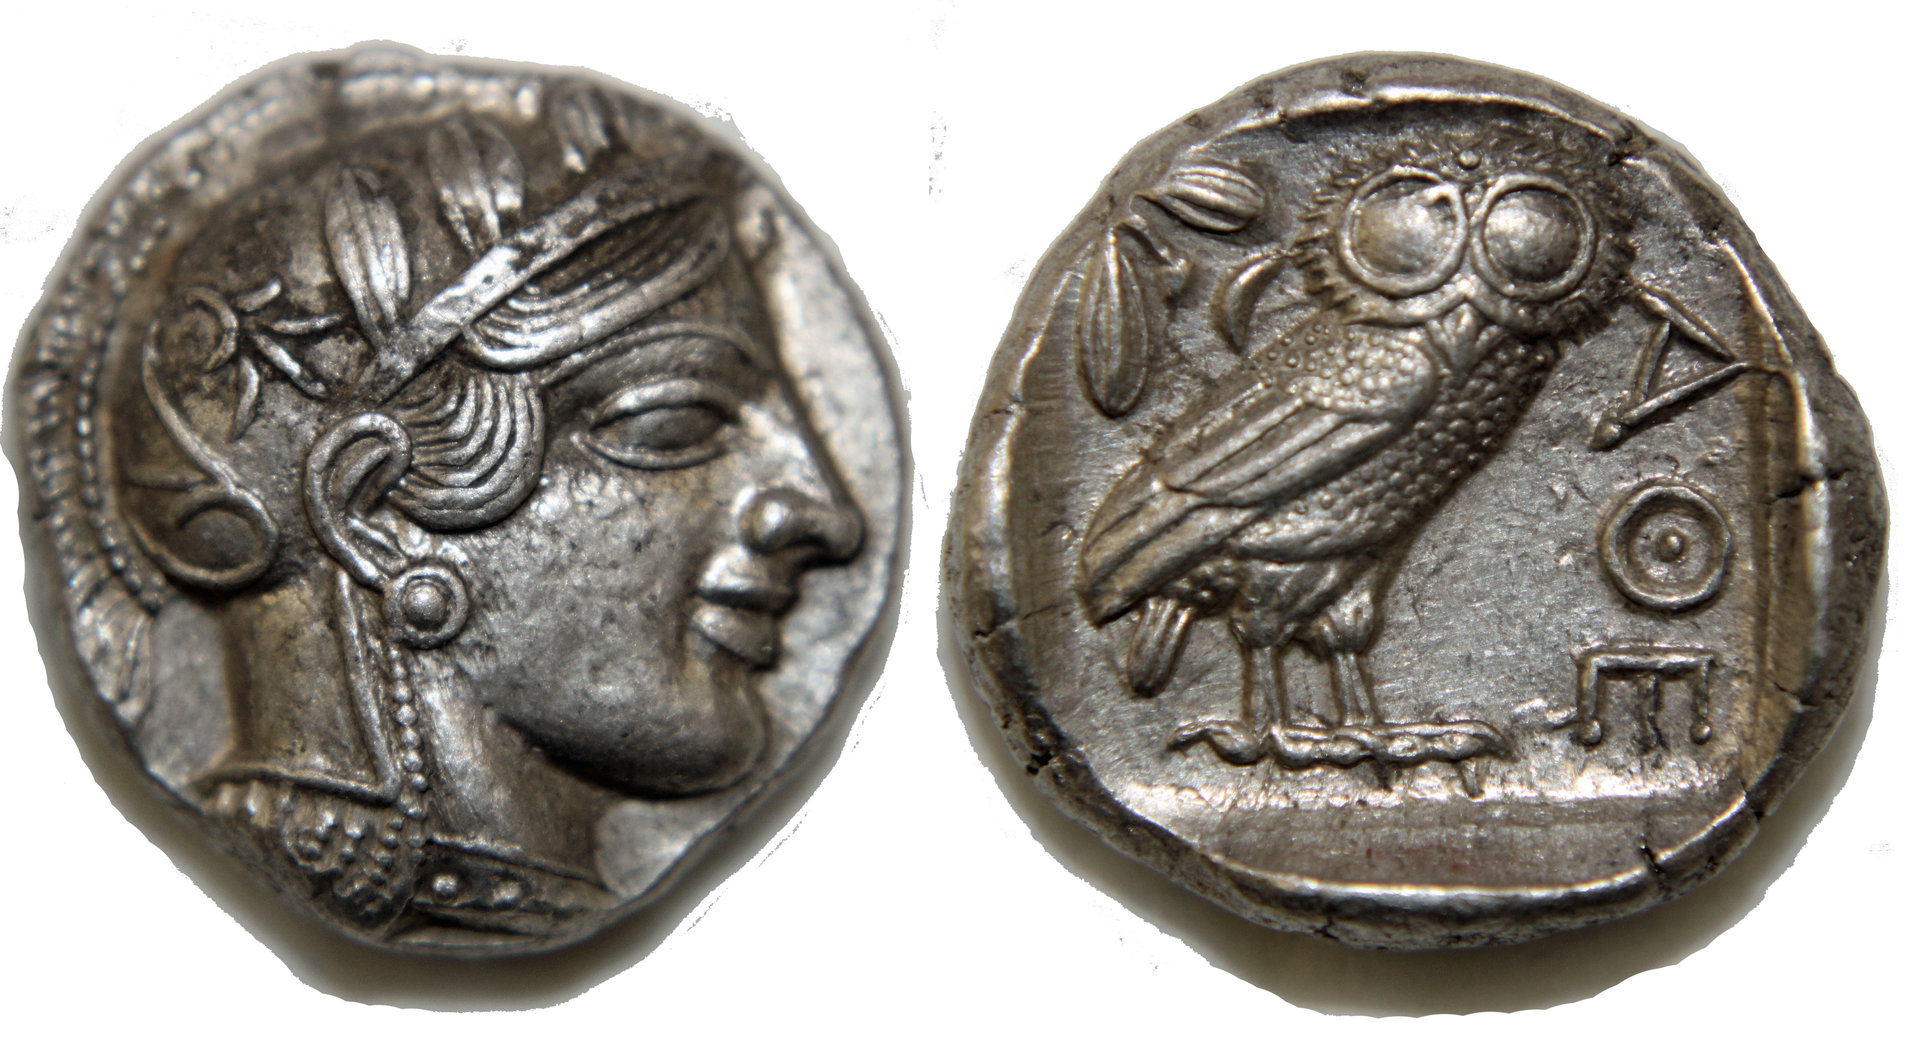 D-Camera Athens Tetradrachm, 454-404 BC, Roma Sale 62, lot 156  6-10-20.jpg